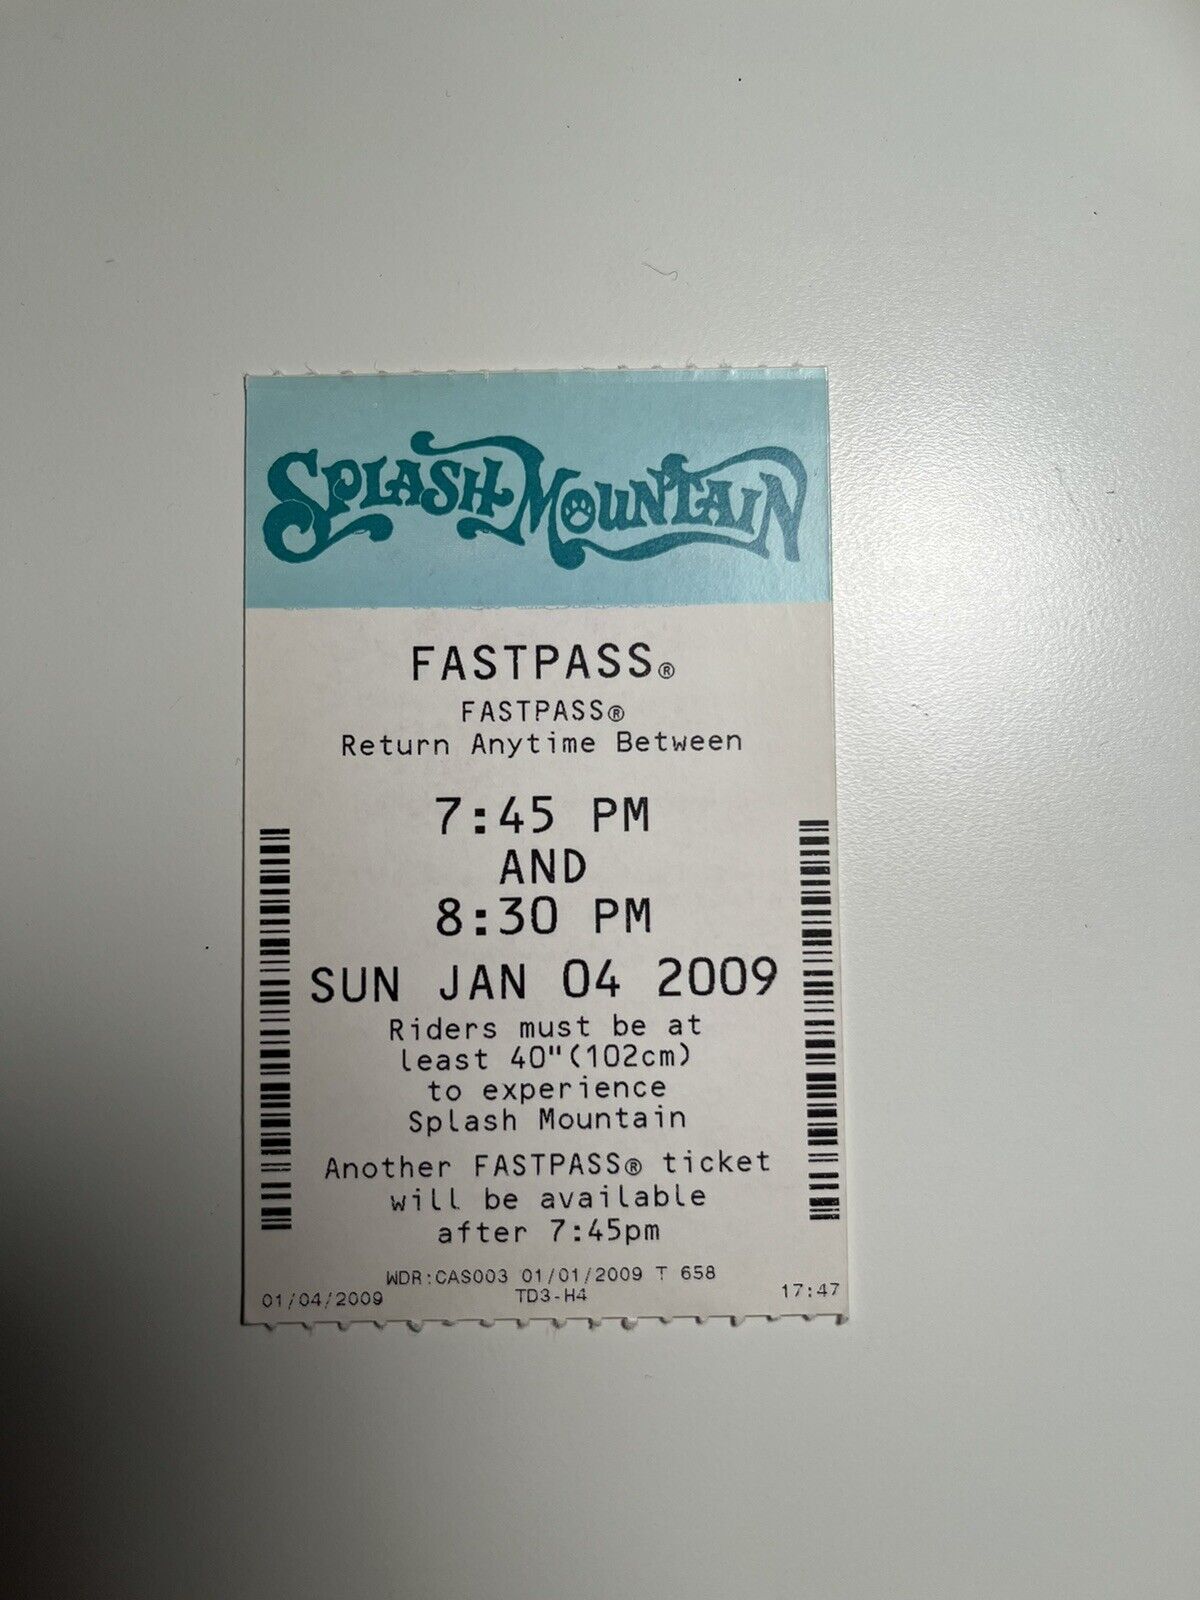 2009 1/4/09 Disney Splash Mountain Fastpass Collector Card Expired 7:45-8:30